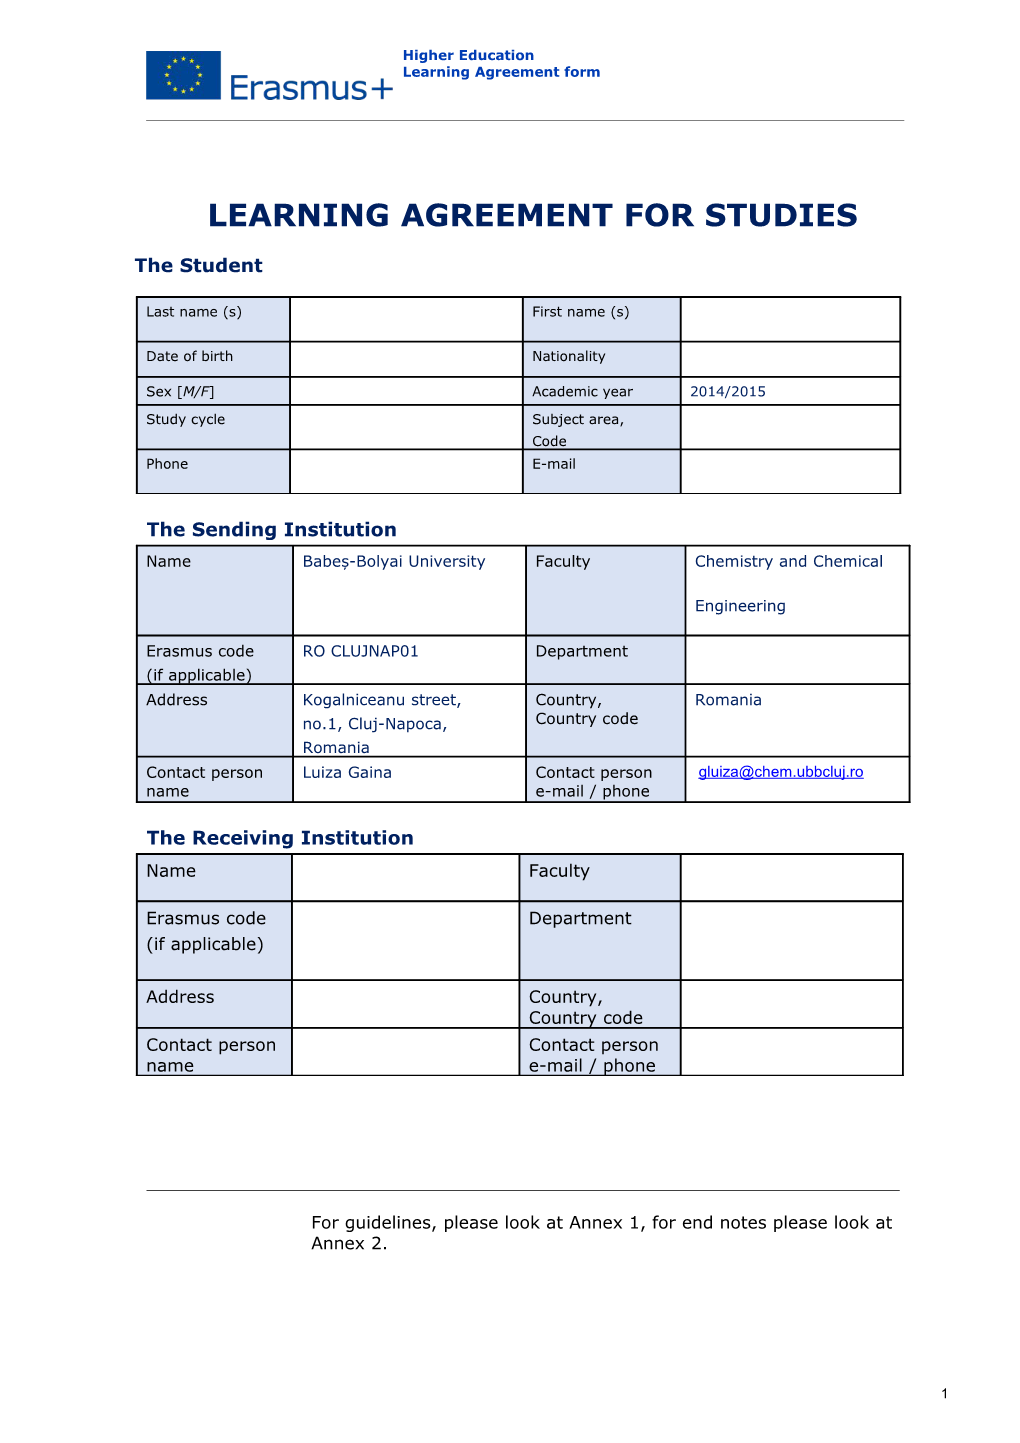 Learning Agreement for Studies s7